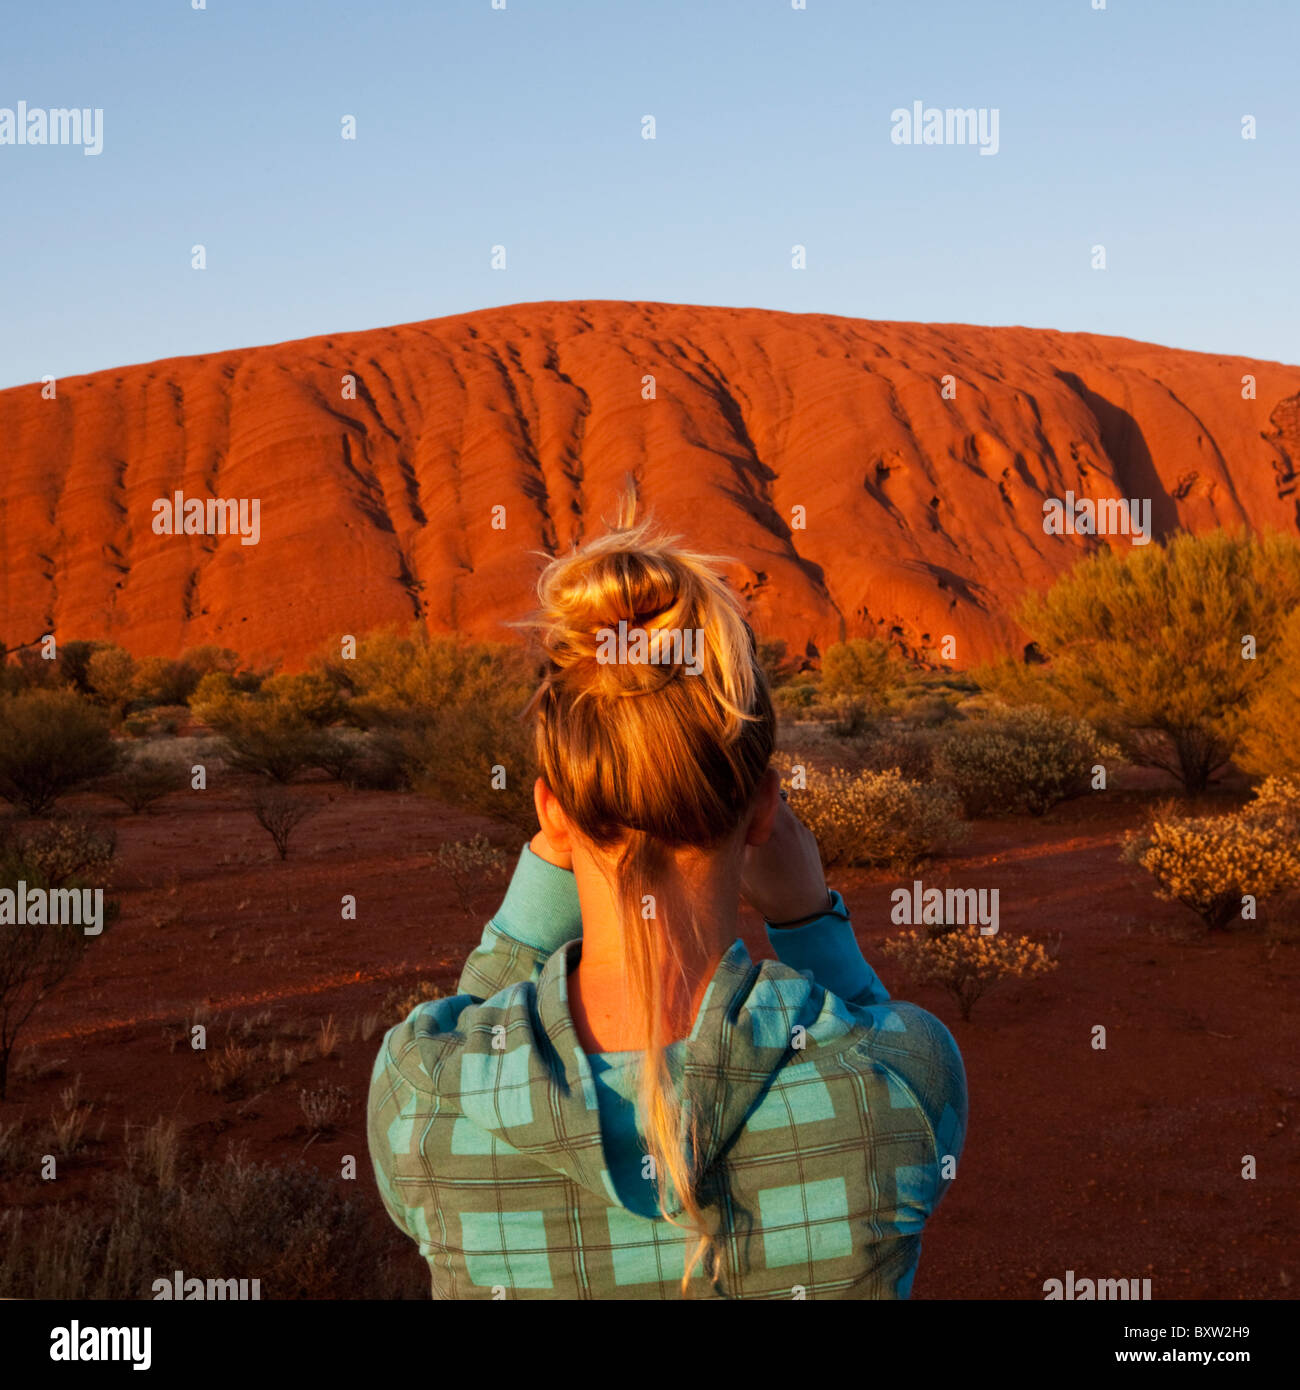 Australien-Northern Territory Uluru - Kata Tjuta National Park junge Frau nimmt Schnappschüsse bei Sonnenaufgang des Ayers Rock im Sommer Stockfoto